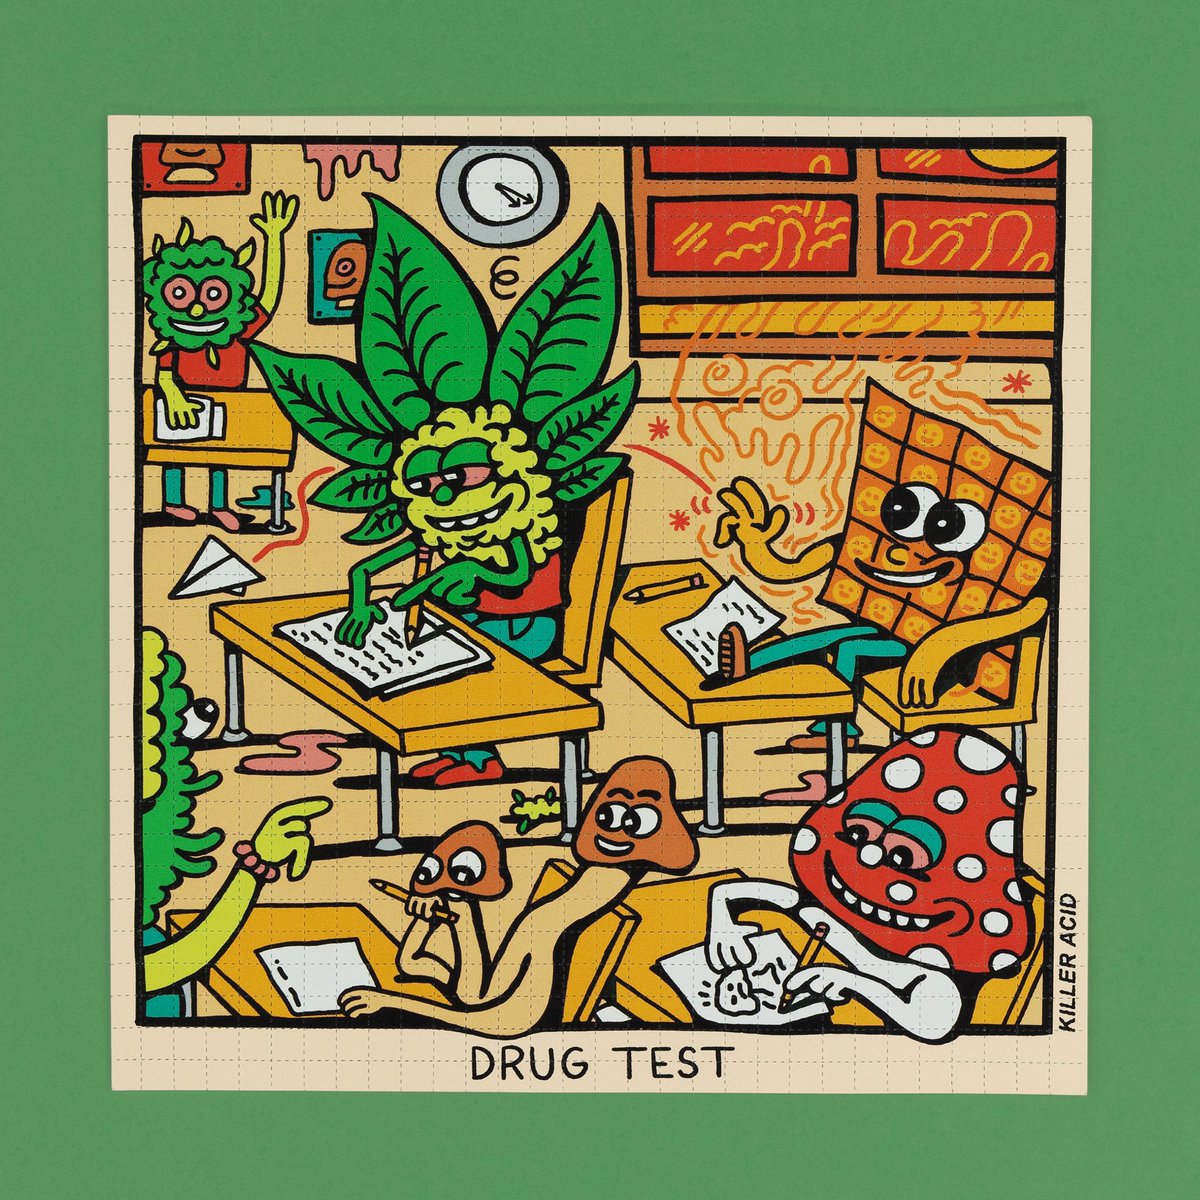 Drug Test by @killeracid 🍄🌱
#psychedelic #trippy #art